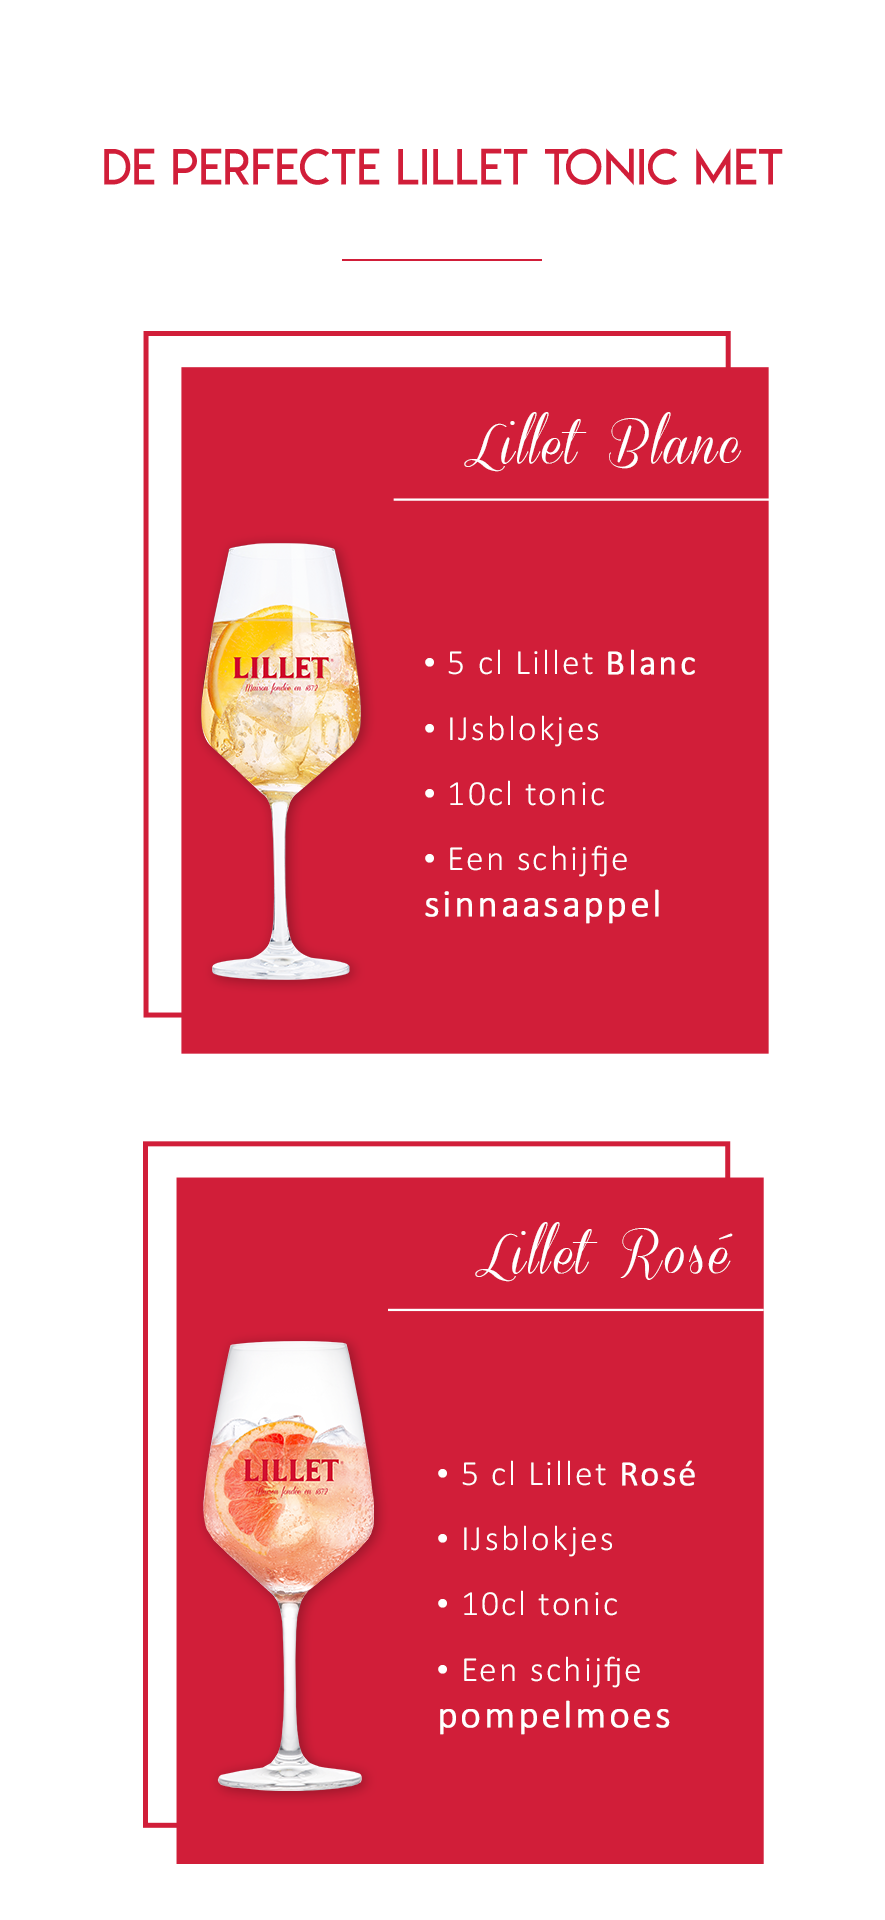 Lillet Blanc vs Lillet Rosé